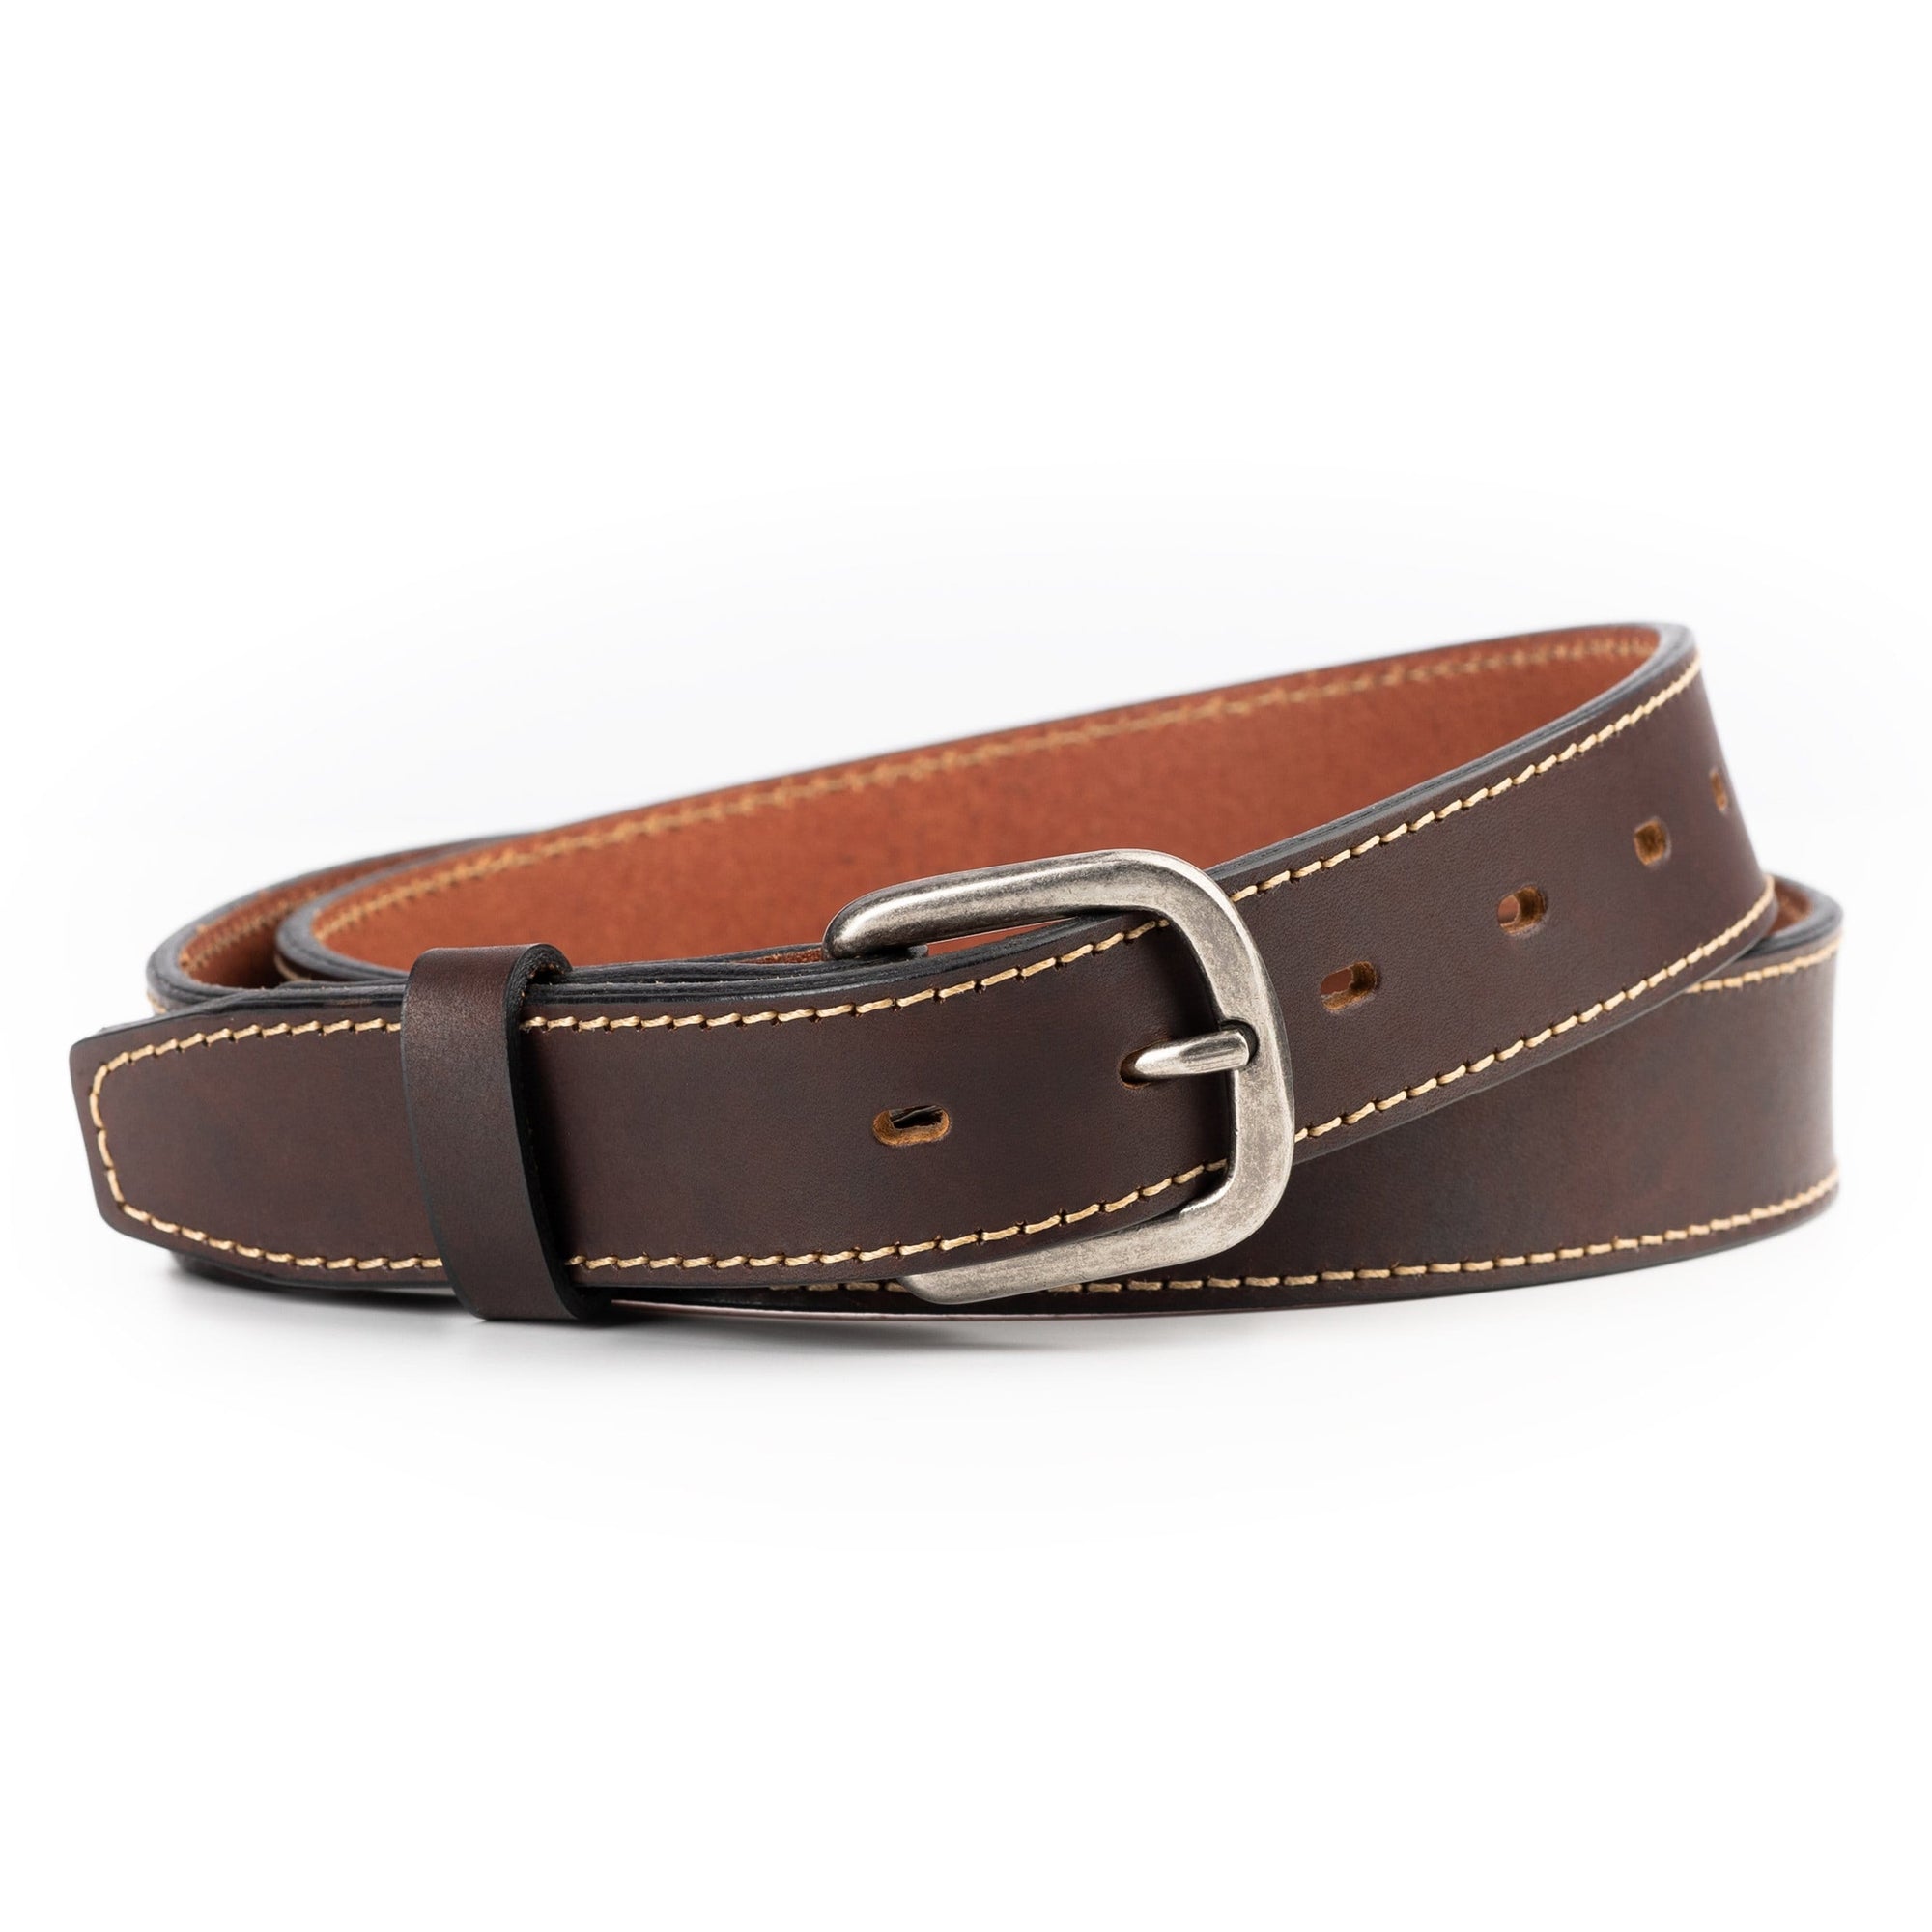 Leather dress belt 1.25” wide-Full Grain leather belt,Men or